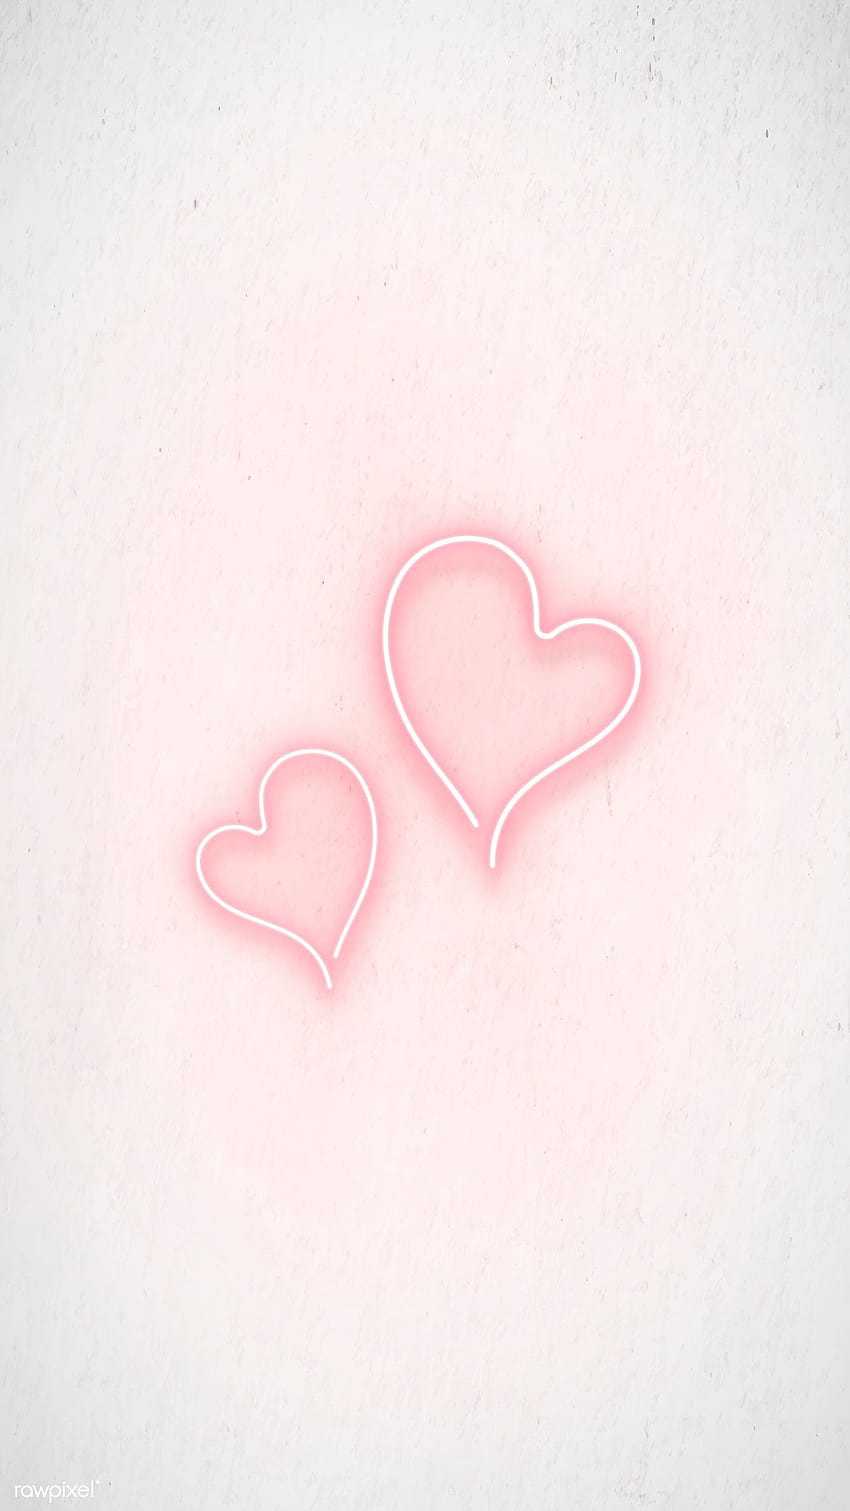 Pink neon double hearts vector ...pinterest.au, pink aesthetic ...